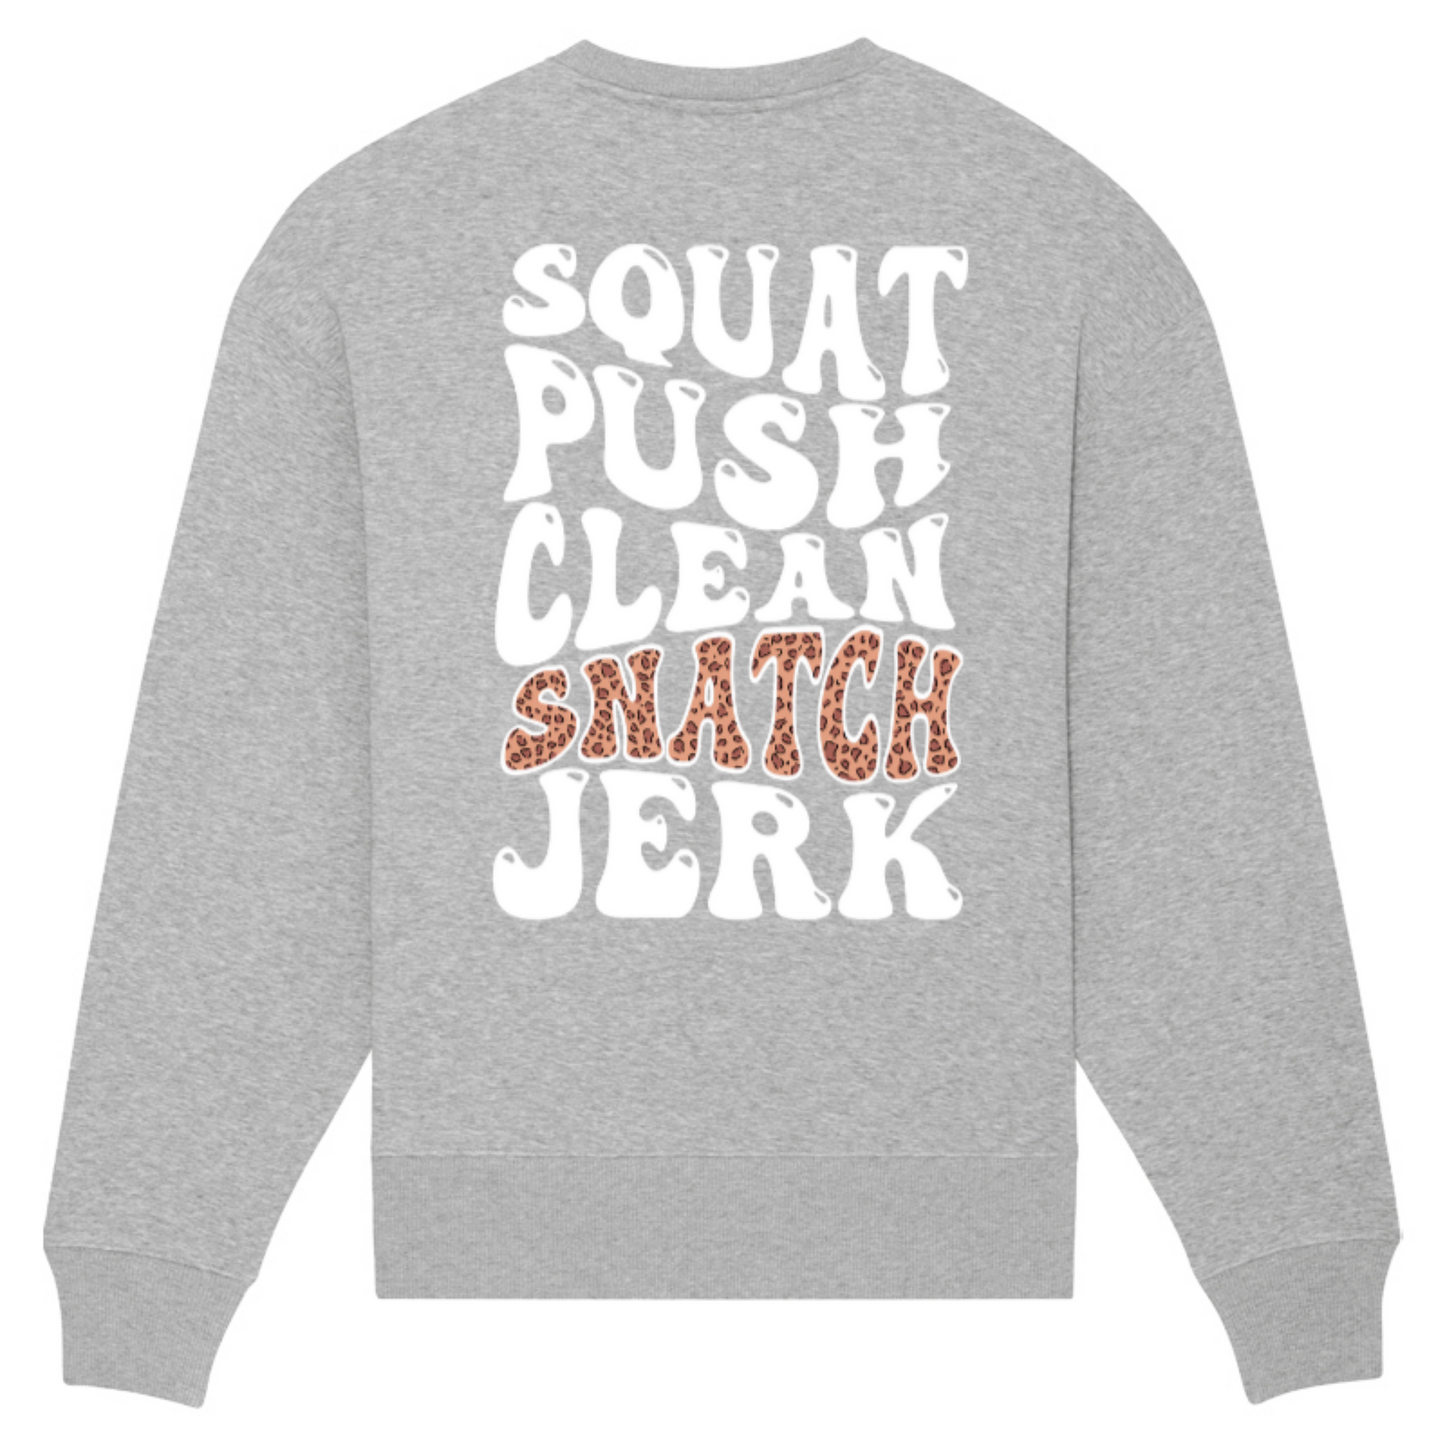 Squat, Push, Clean, Snatch, Jerk Oversize Sweater